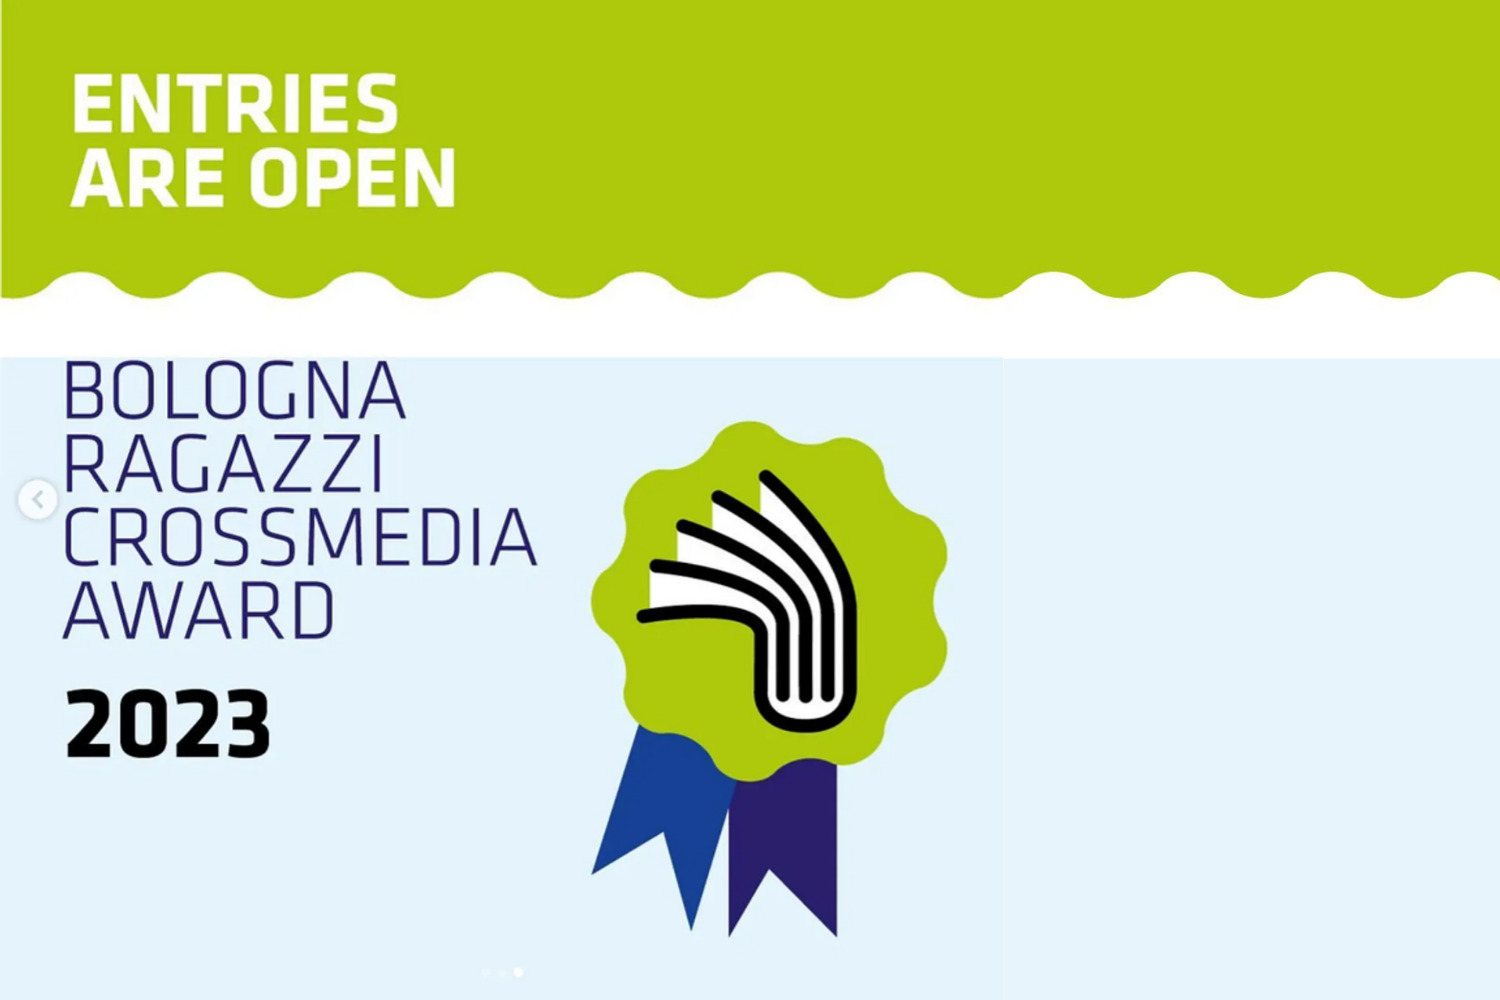 Bologna ragazzi CrossMedia Award 2023